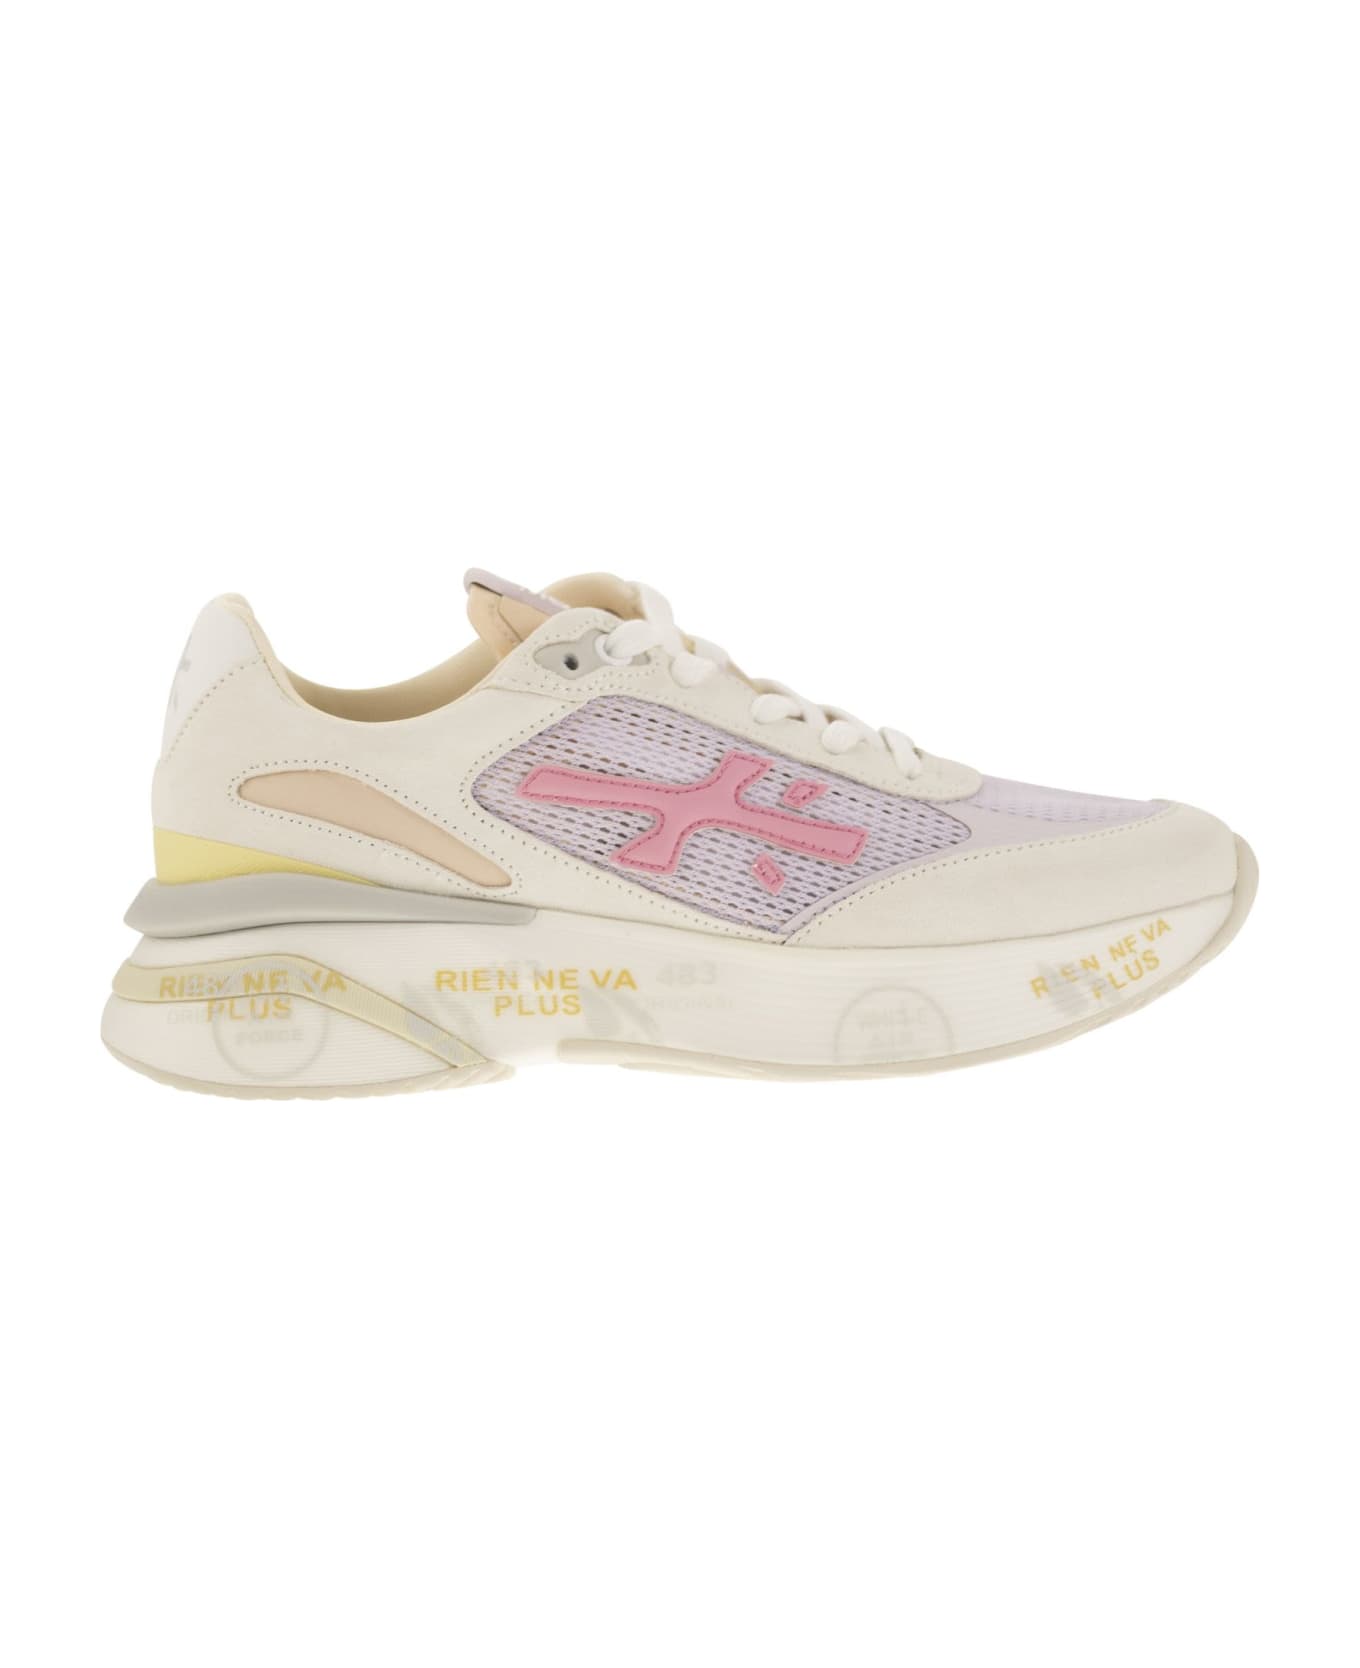 Premiata Moerund Sneakers - White/pink